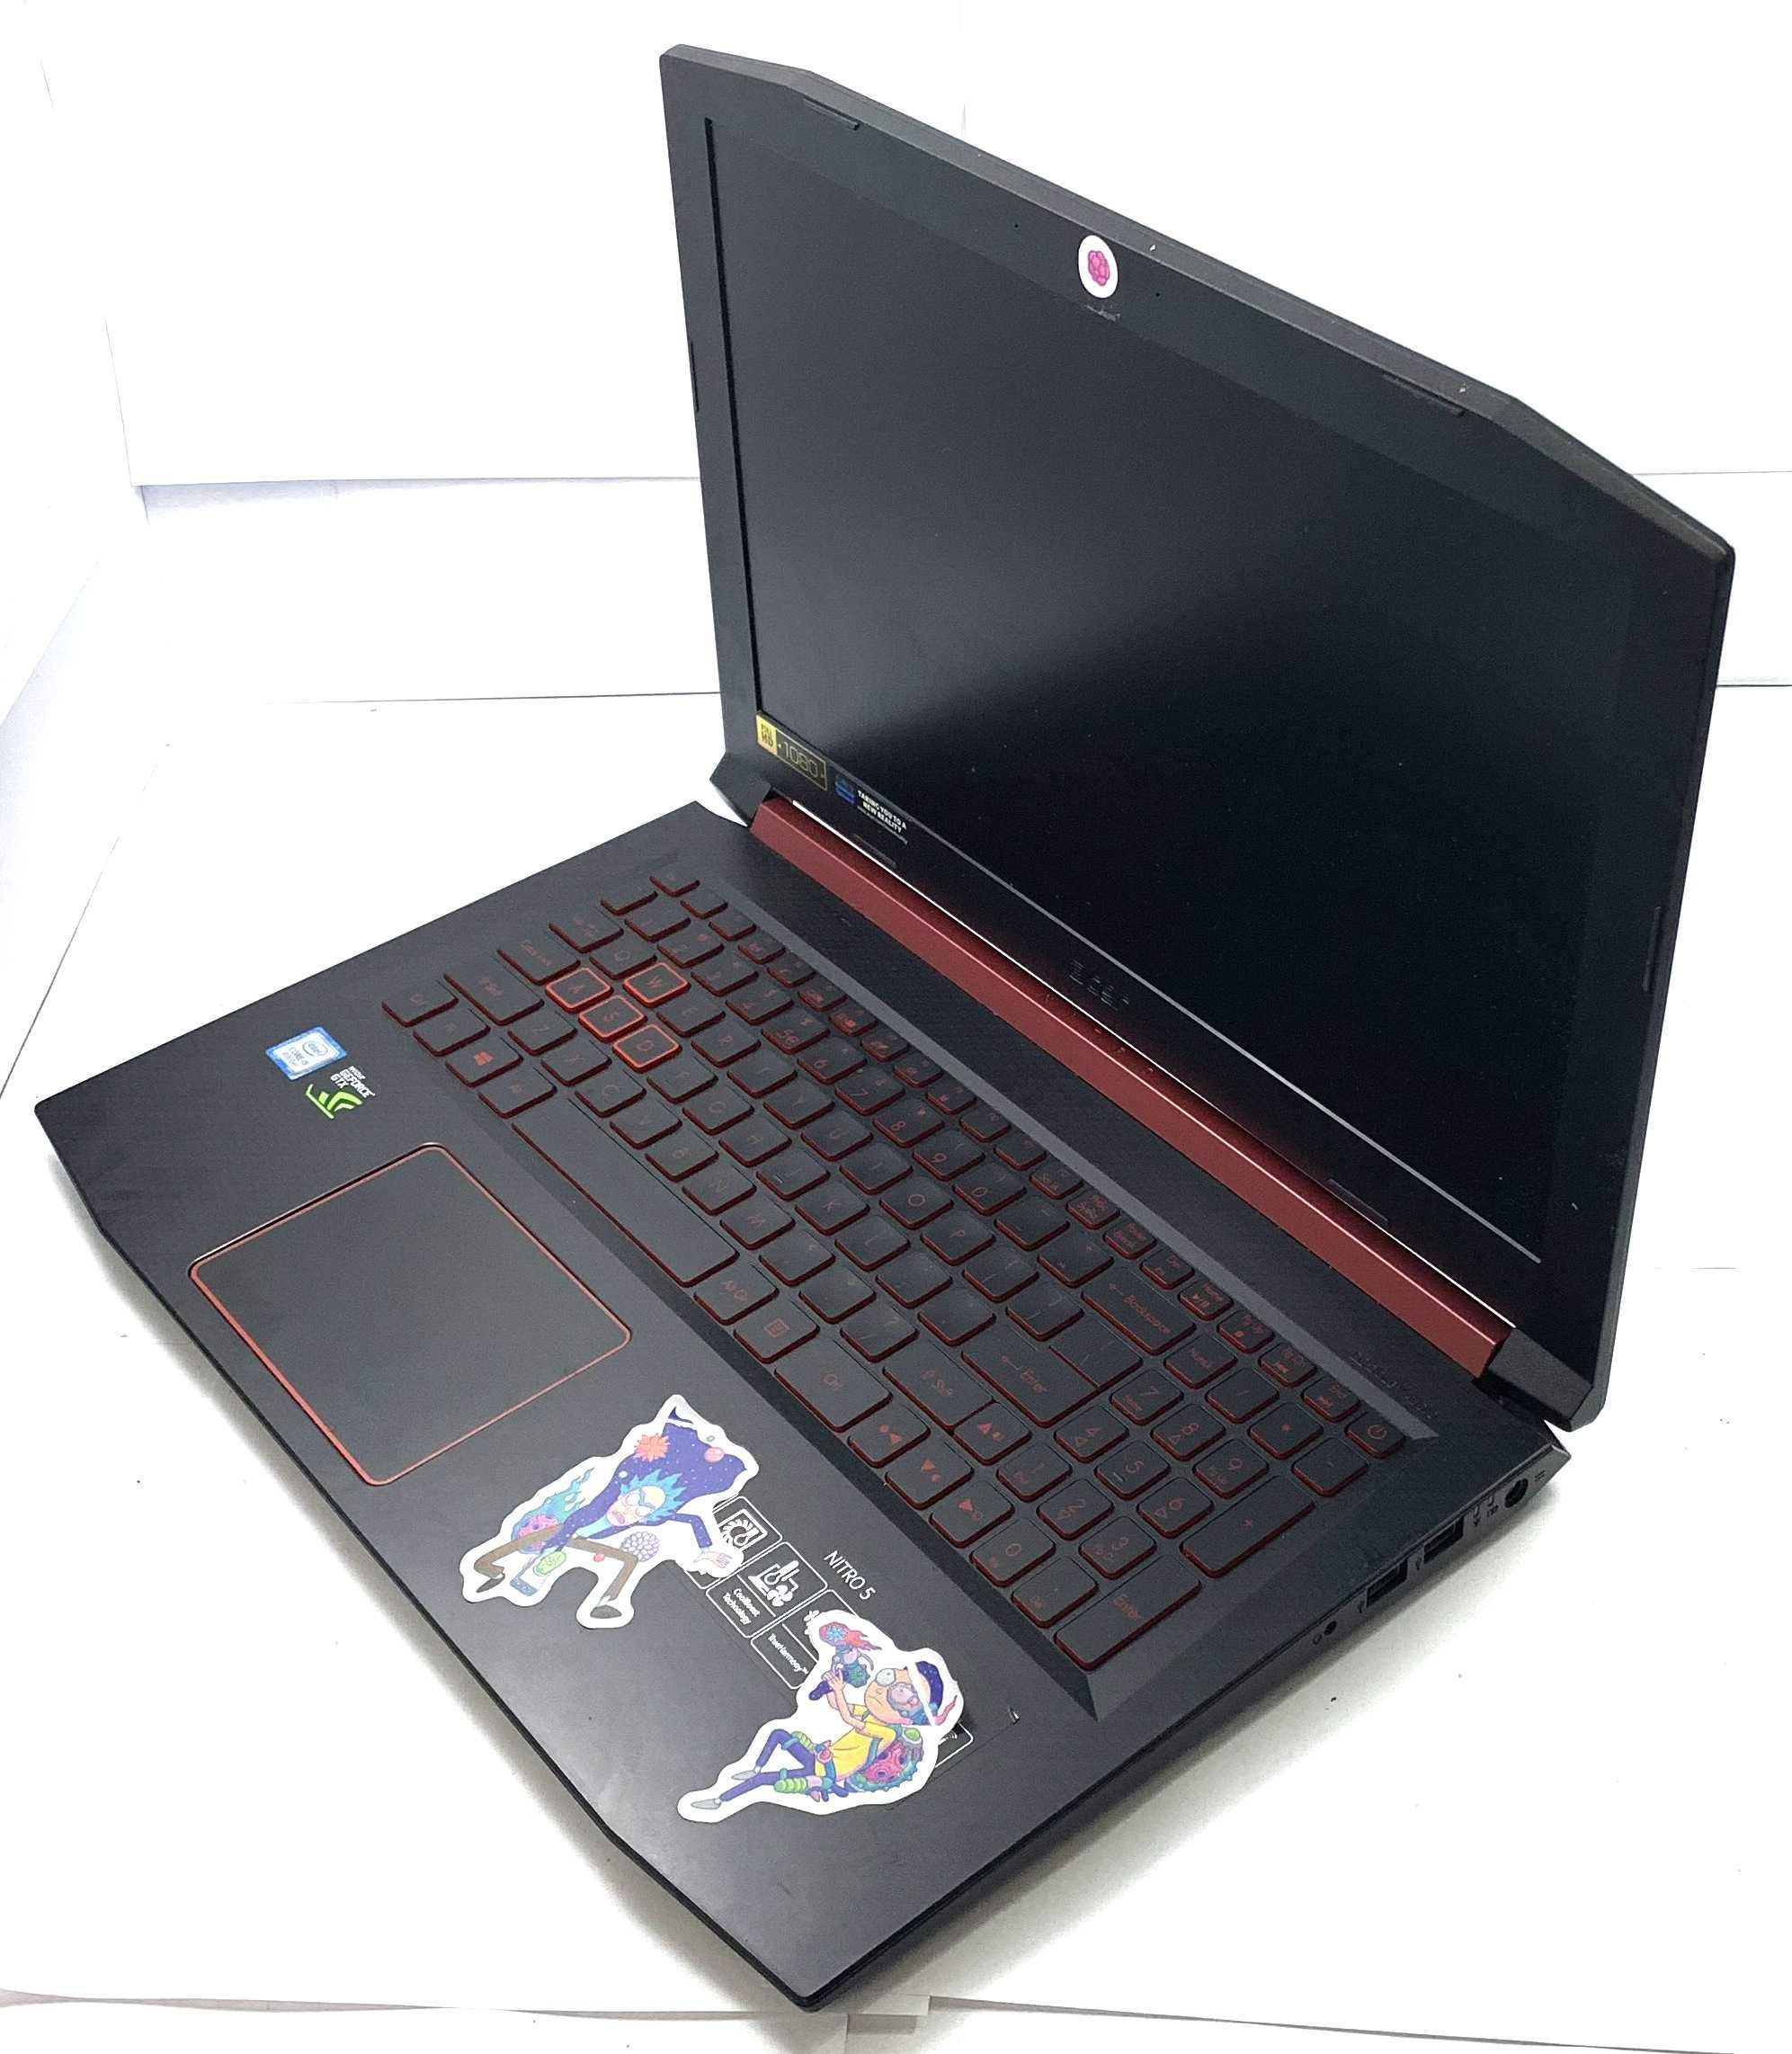 Laptop Acer Nitro 5 I5-8300H GTX1050 8/512GB SSD